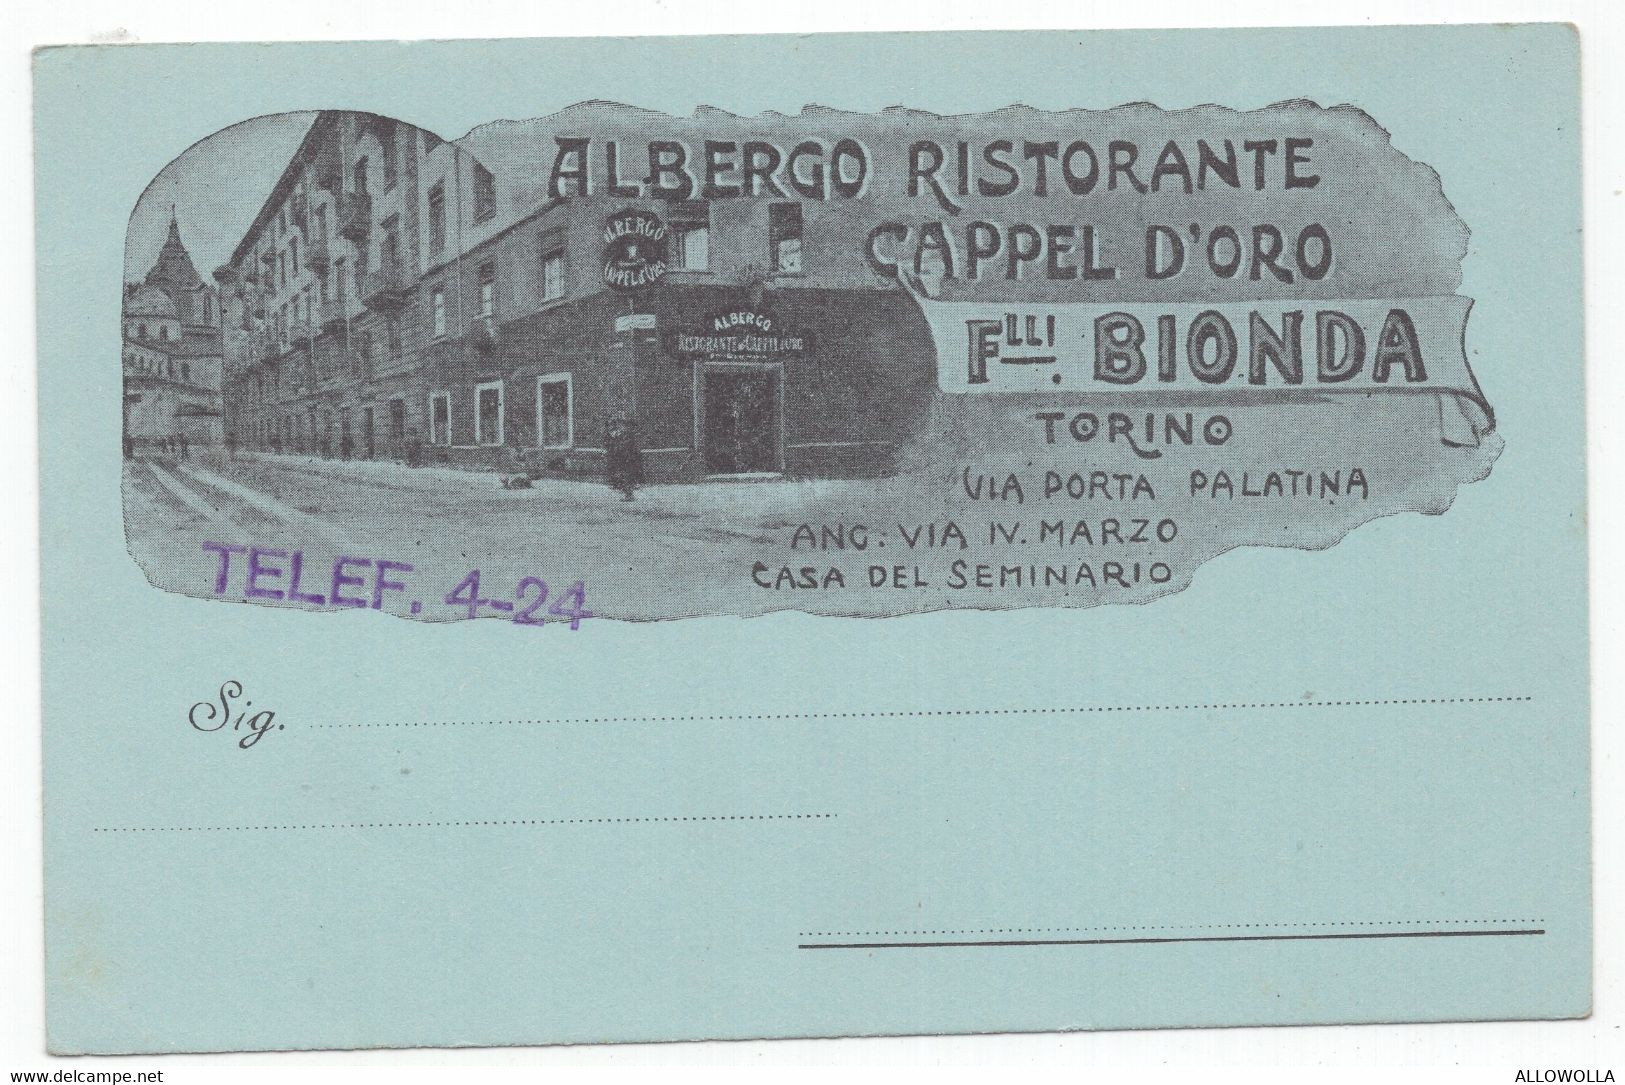 18507 " ALBERGO RISTORANTE CAPPEL D'ORO-F.LLI BIONDA-TORINO "VERA FOTO-CART. POST. NON SPED. - Bars, Hotels & Restaurants